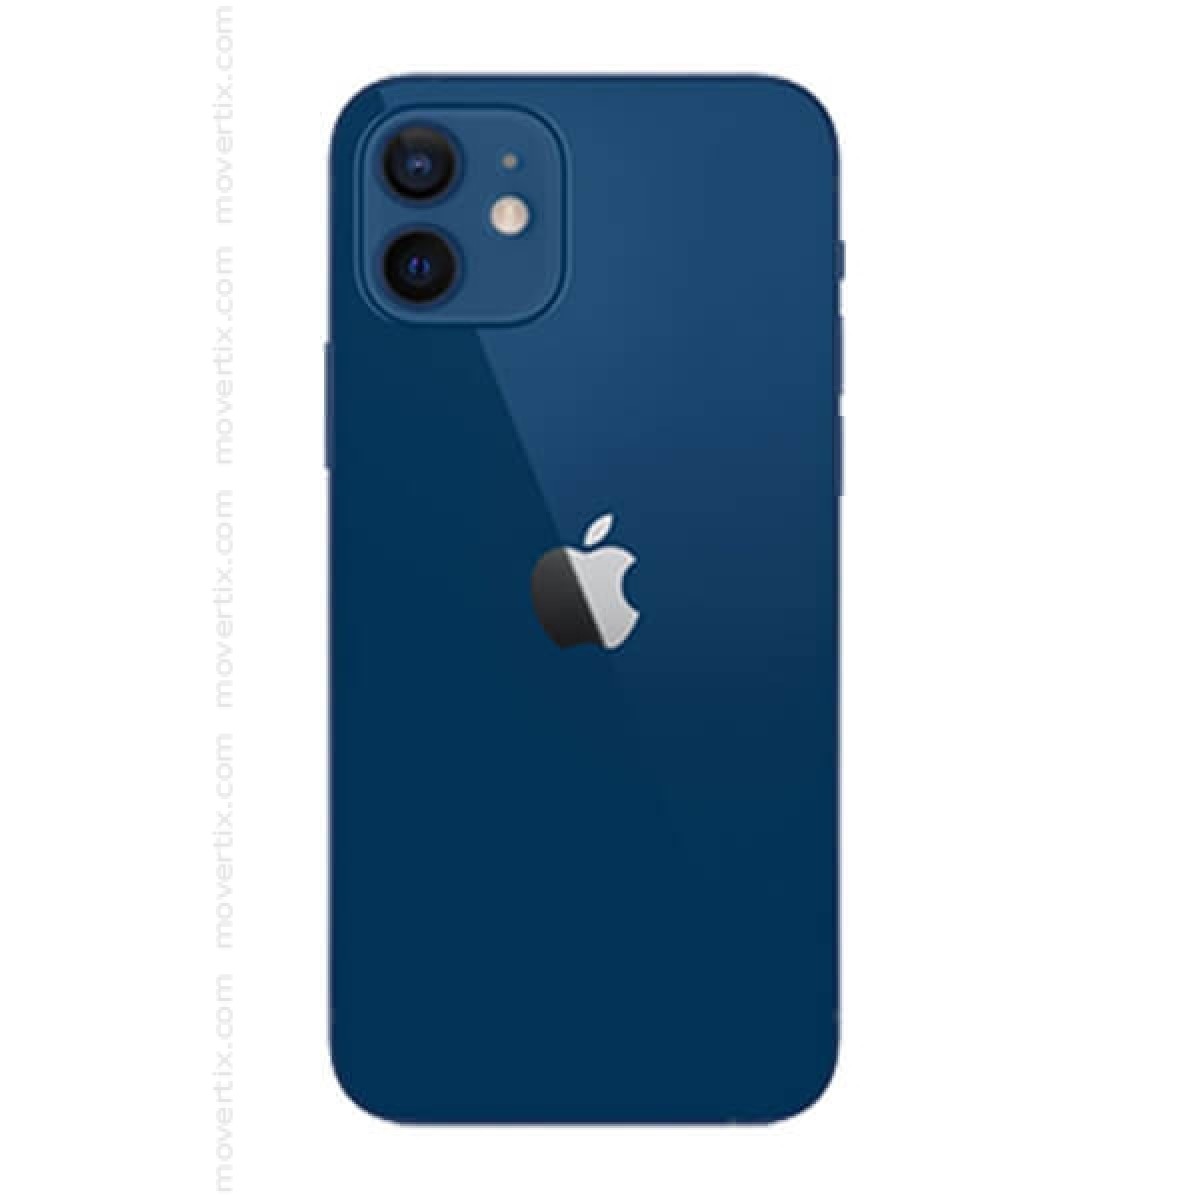 iPhone 12 Blue 128GB (194252032237) | Movertix Mobile Phones Shop